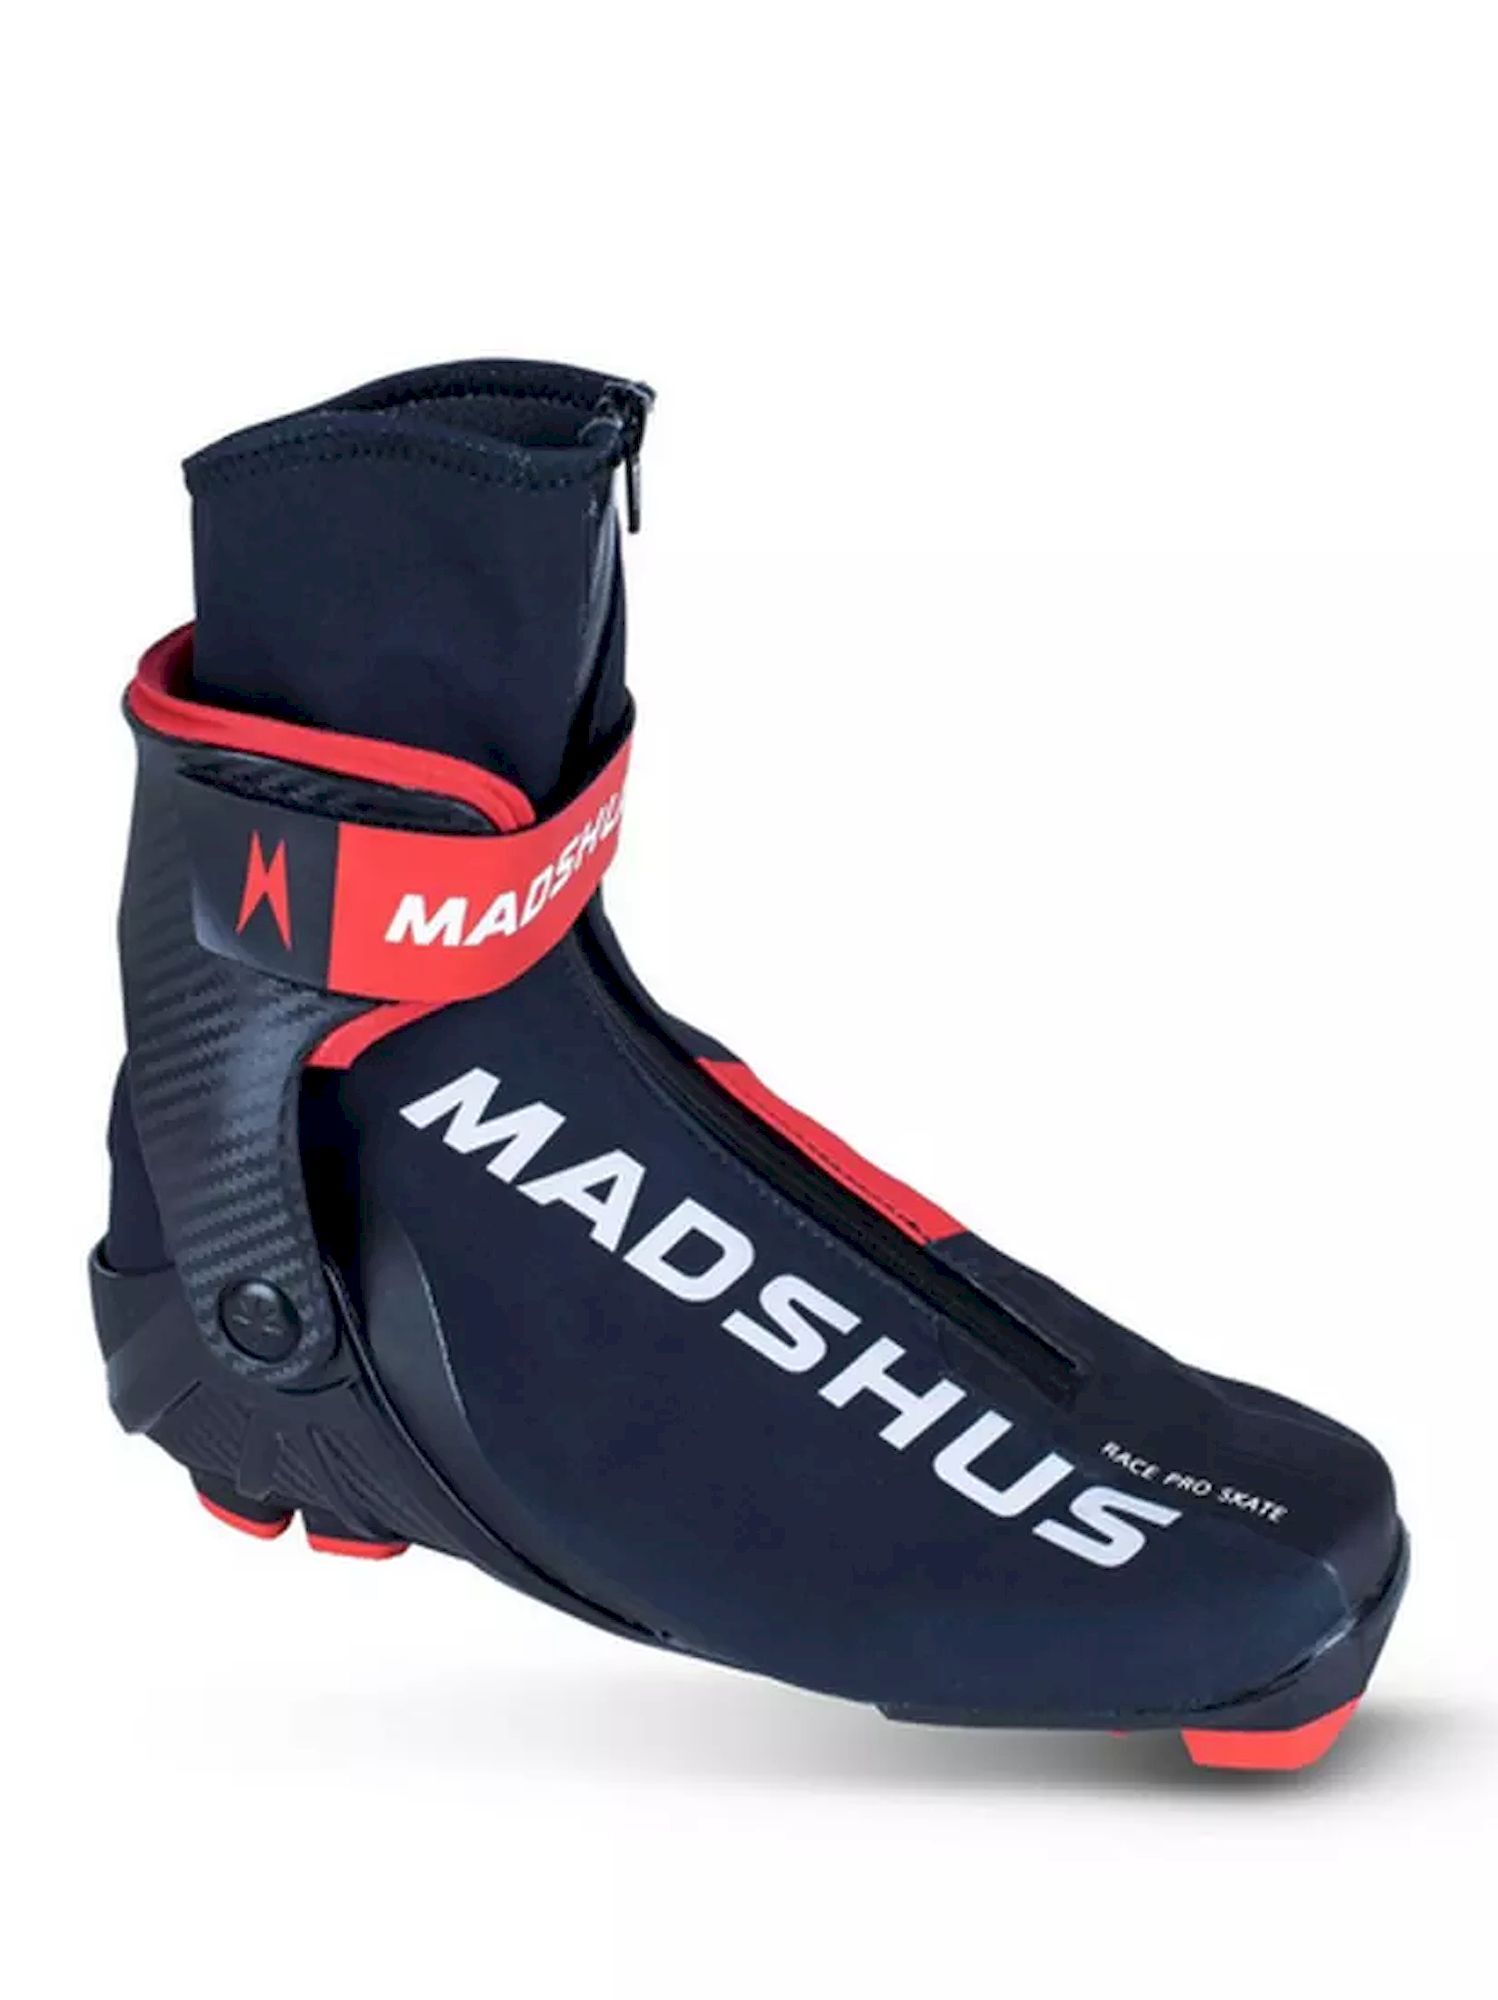 Madshus Race Pro Skate - Langlaufschoenen | Hardloop